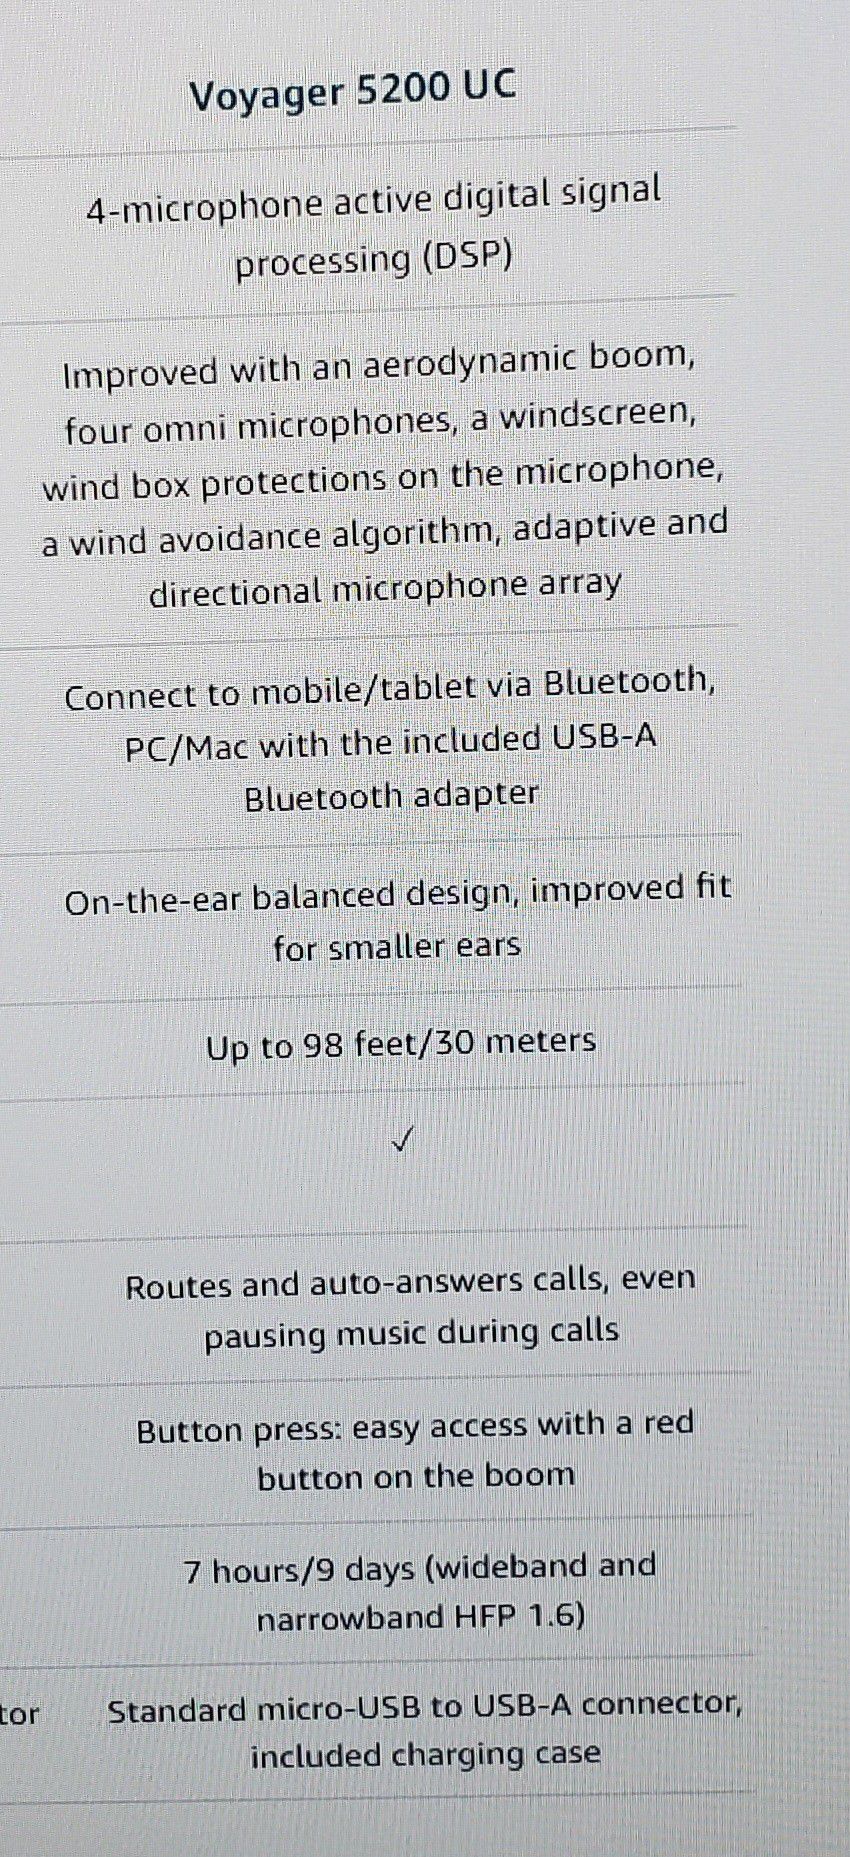 Plantronics Voyager Wireless Headset